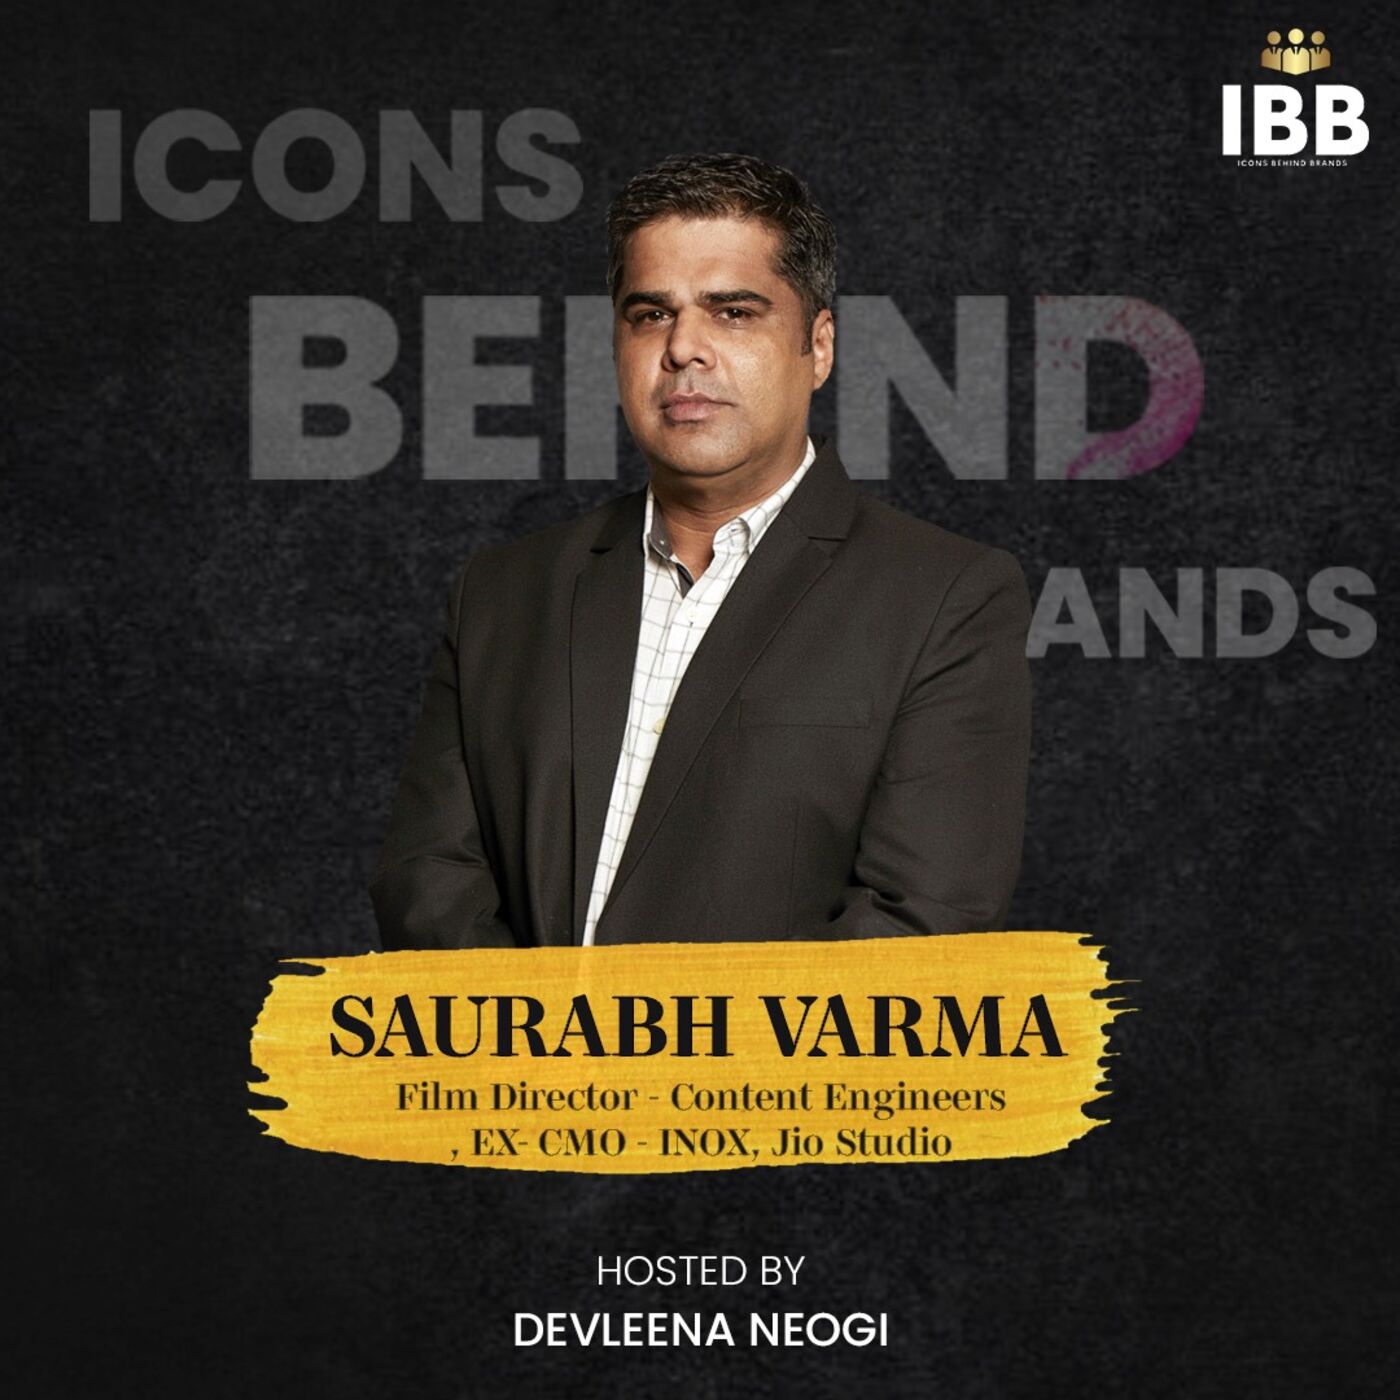 A Sneak Peek of the Upcoming episode with Mr Saurabh Varma